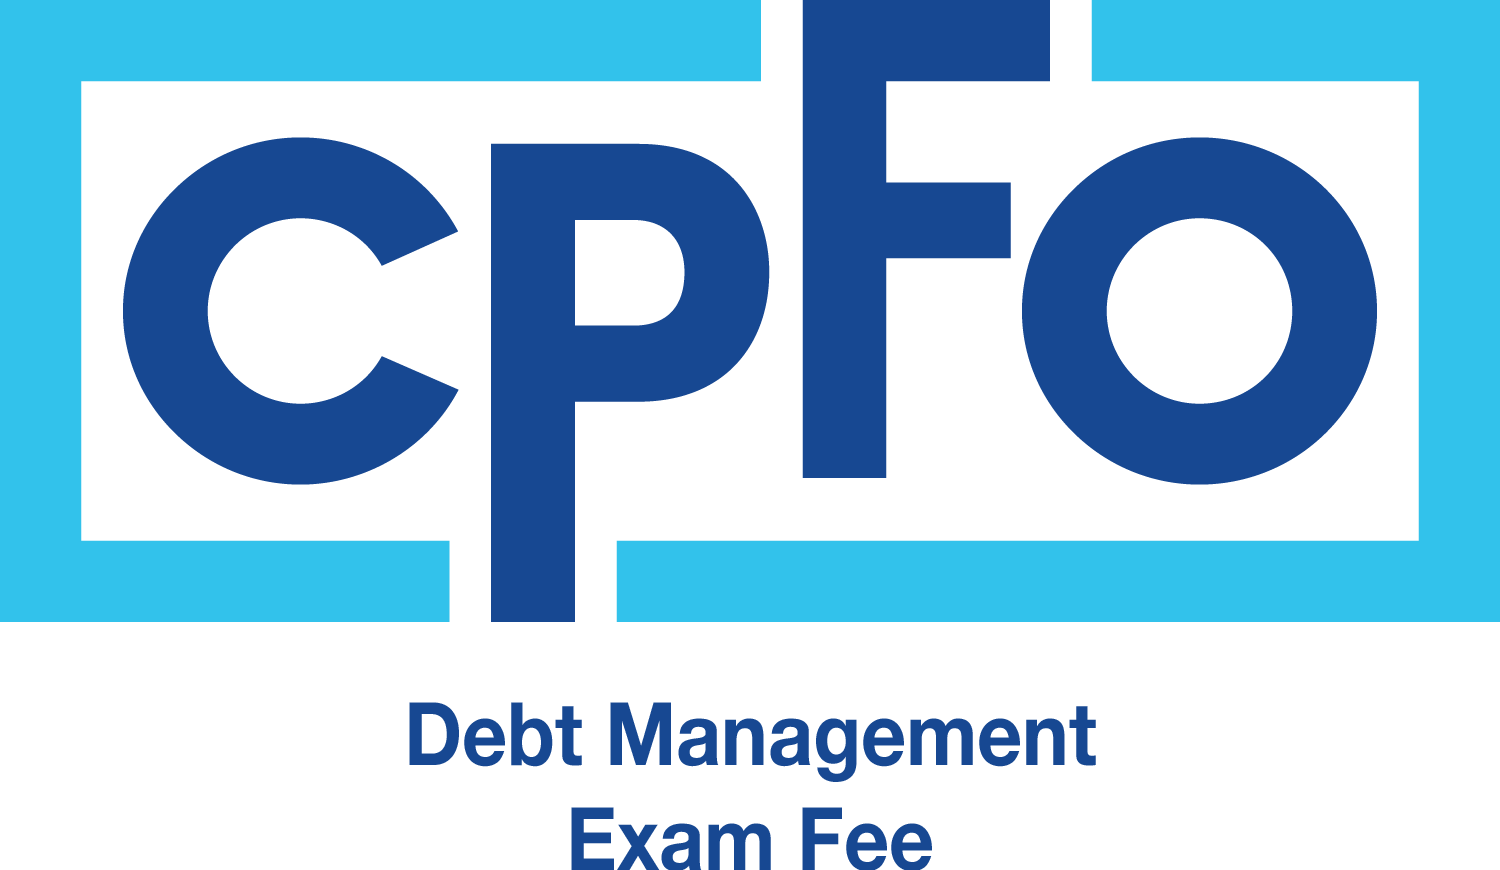 CPFO Exam Fee - Debt Management